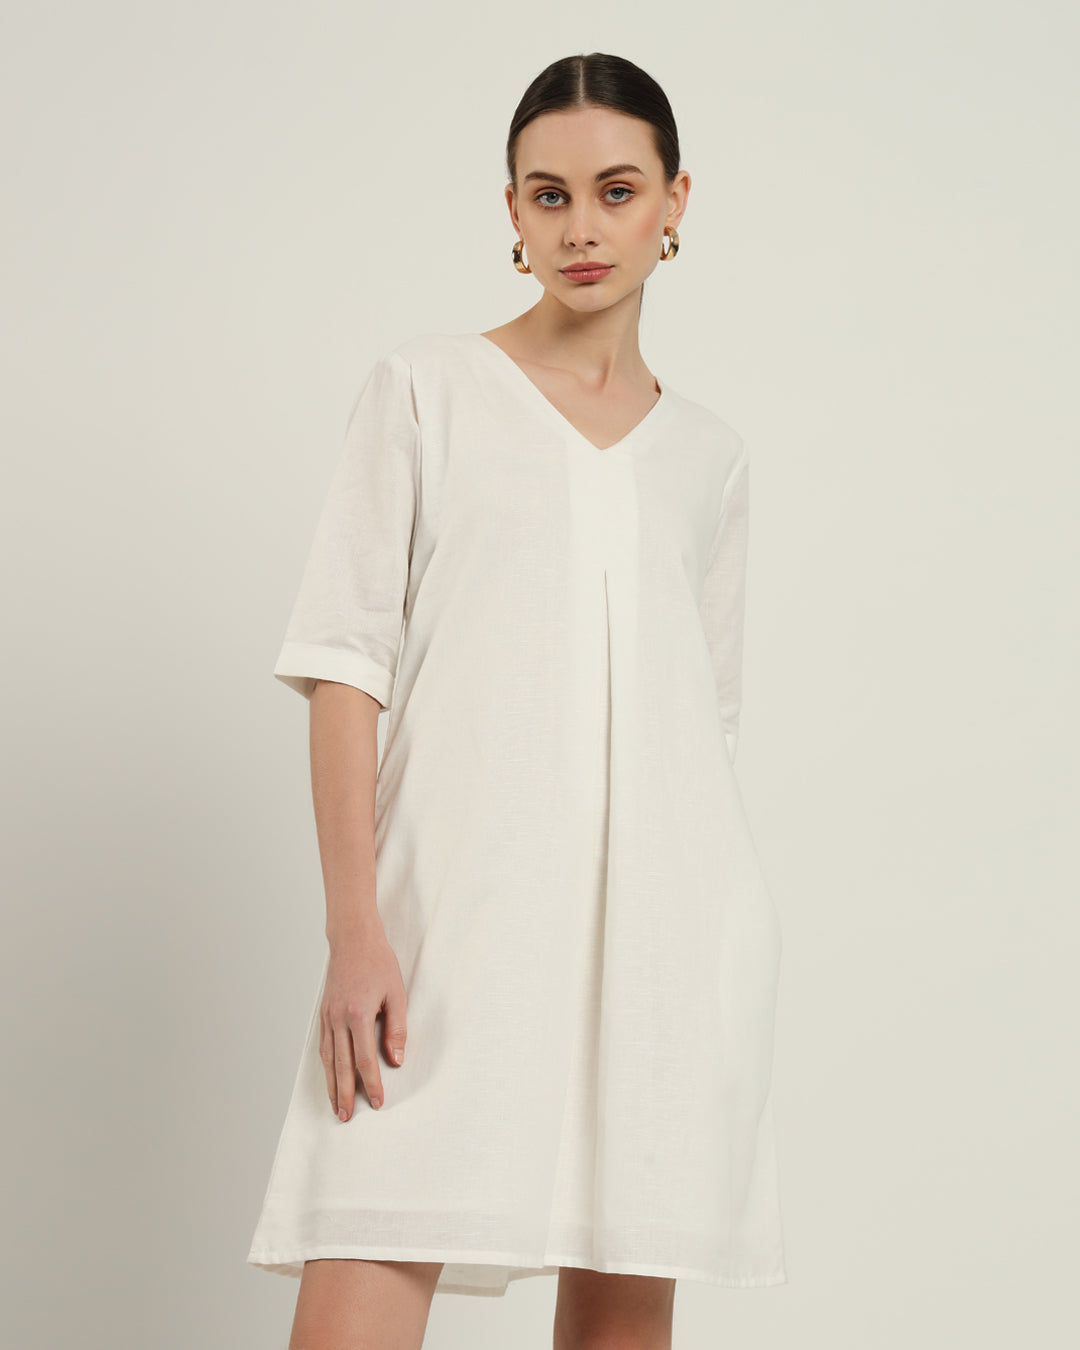 The Giza Daisy White Linen Dress